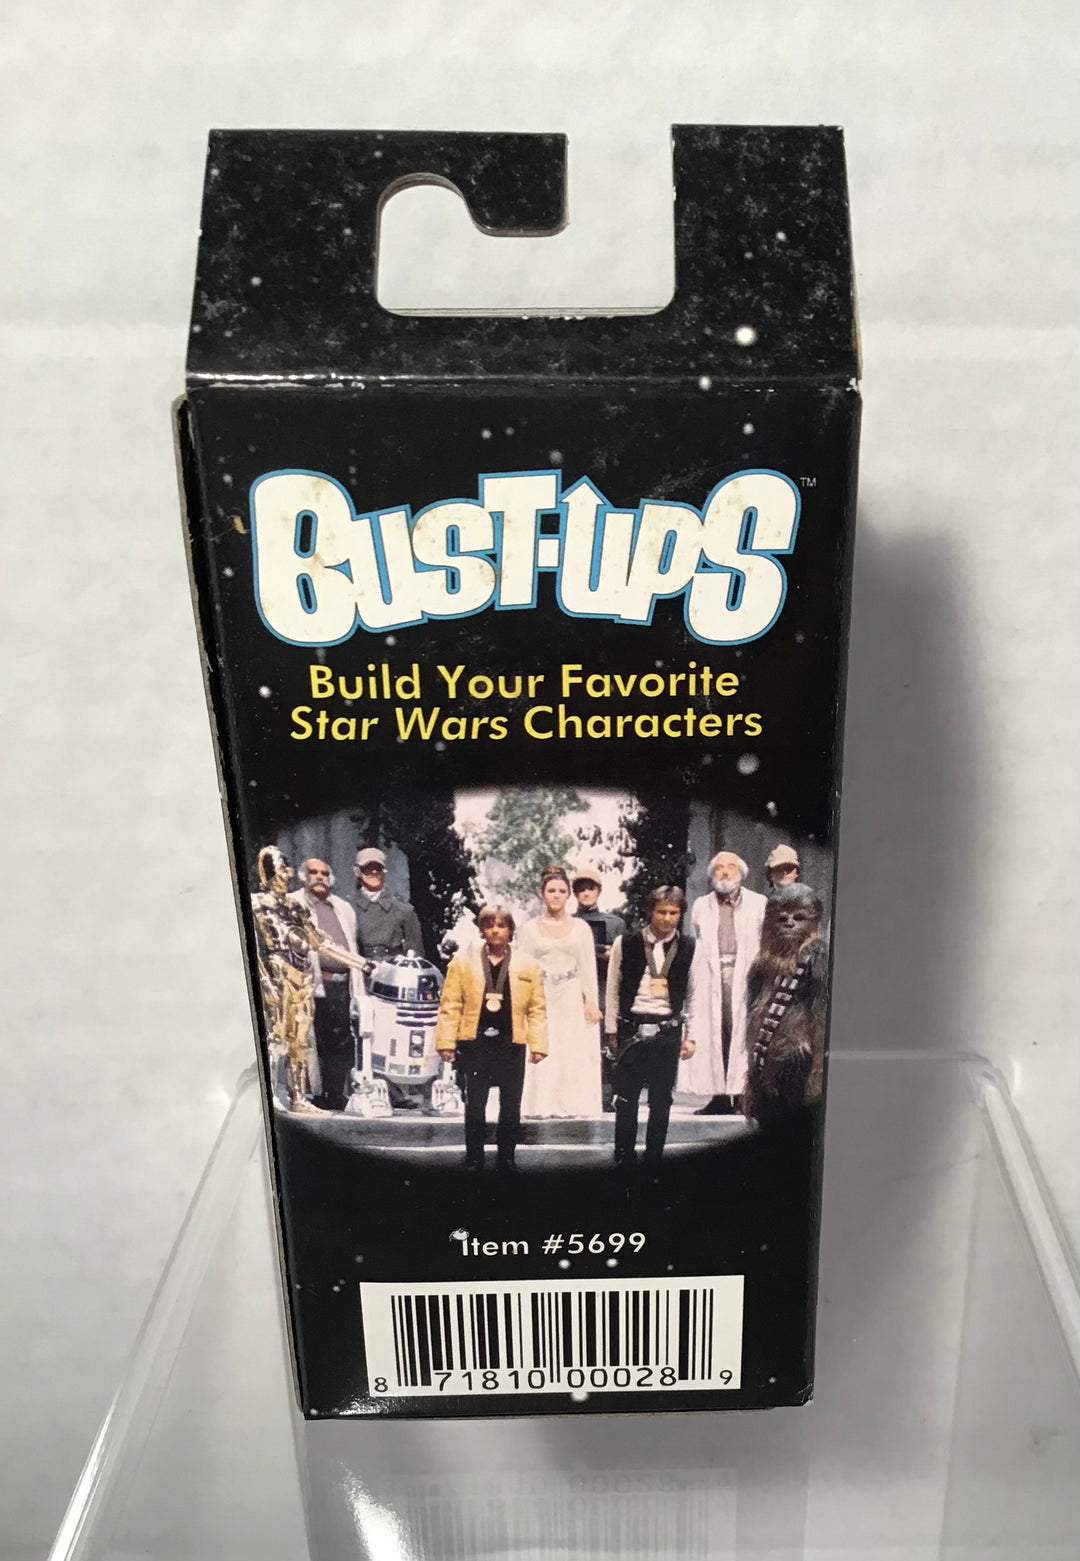 Star Wars Luke Skywalker Bust Ups Micro-Bust Model Kits Series 1 Gentle Giant Ltd 2004 Complete